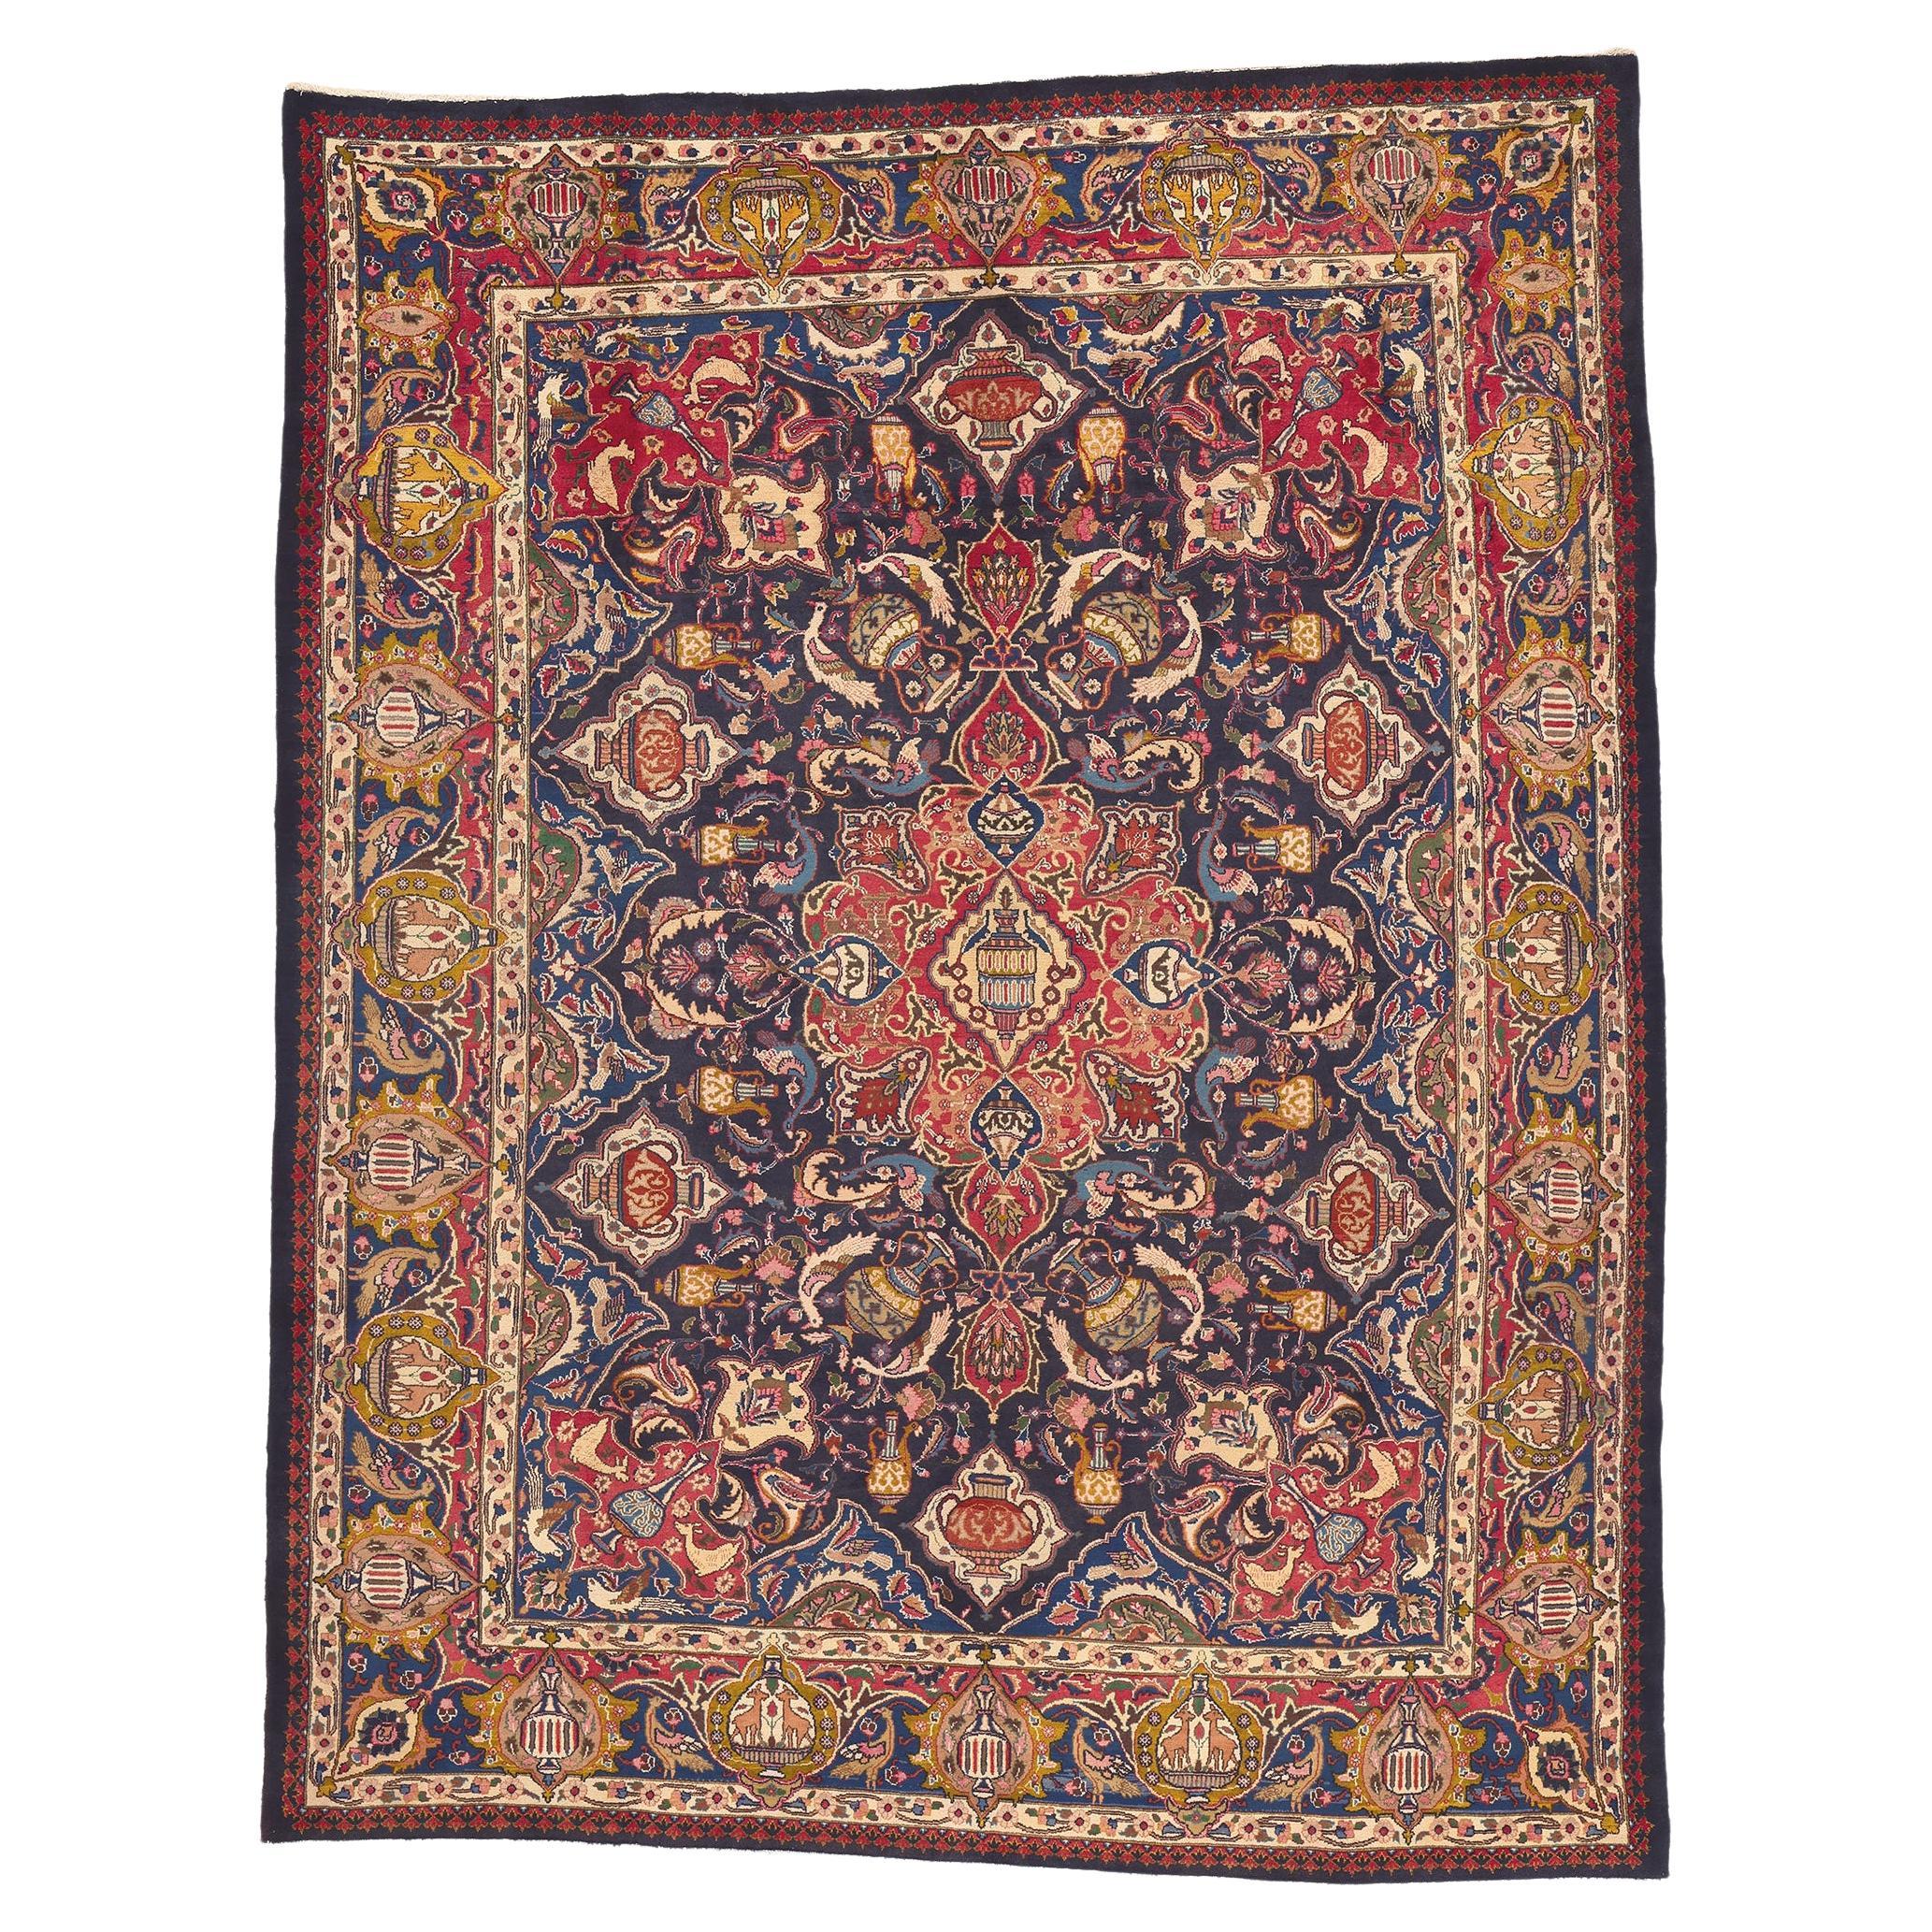 Vintage Persian Zir Khaki Mashhad Rug, Art Nouveau Meets Worldly Treasures